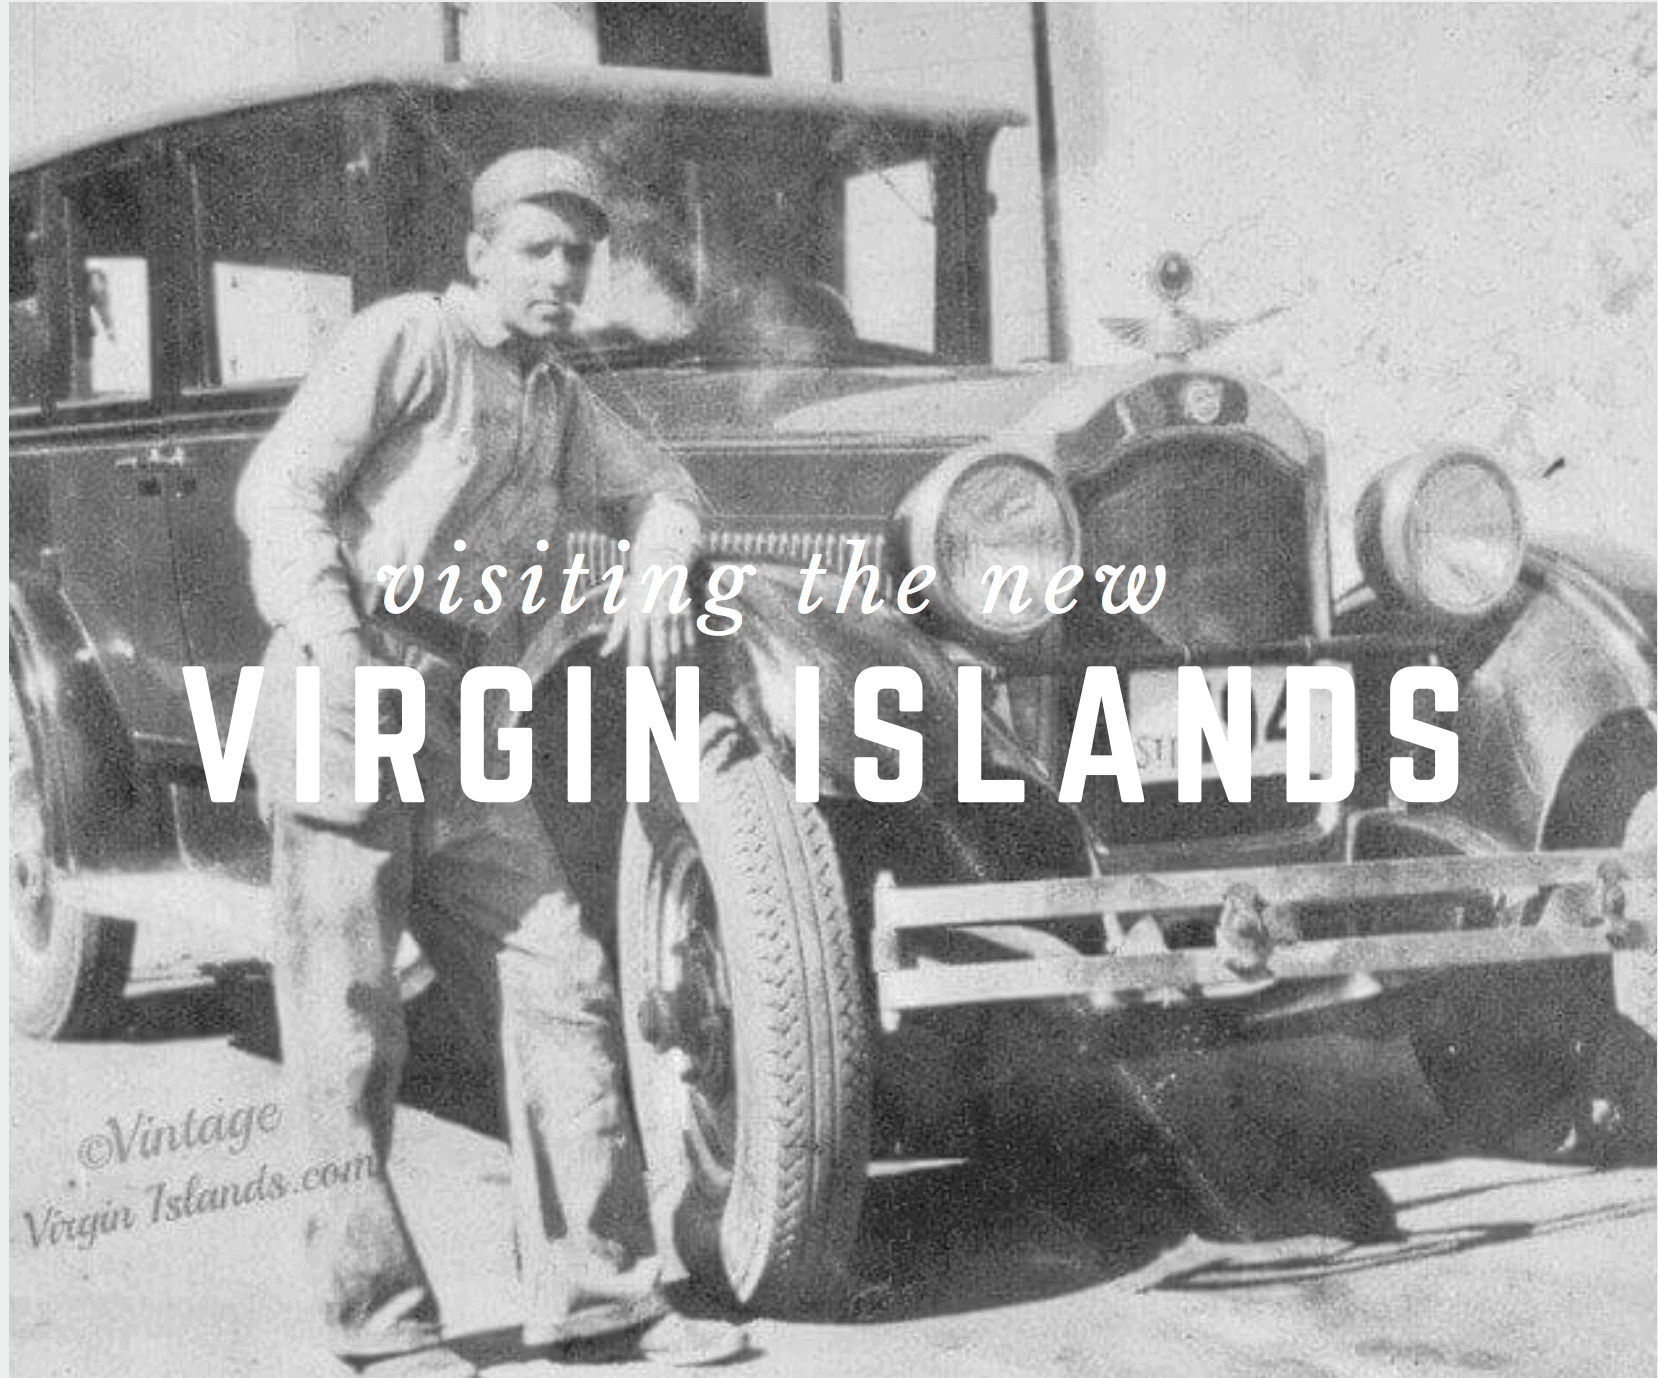 Driving around the new Virgin Islands